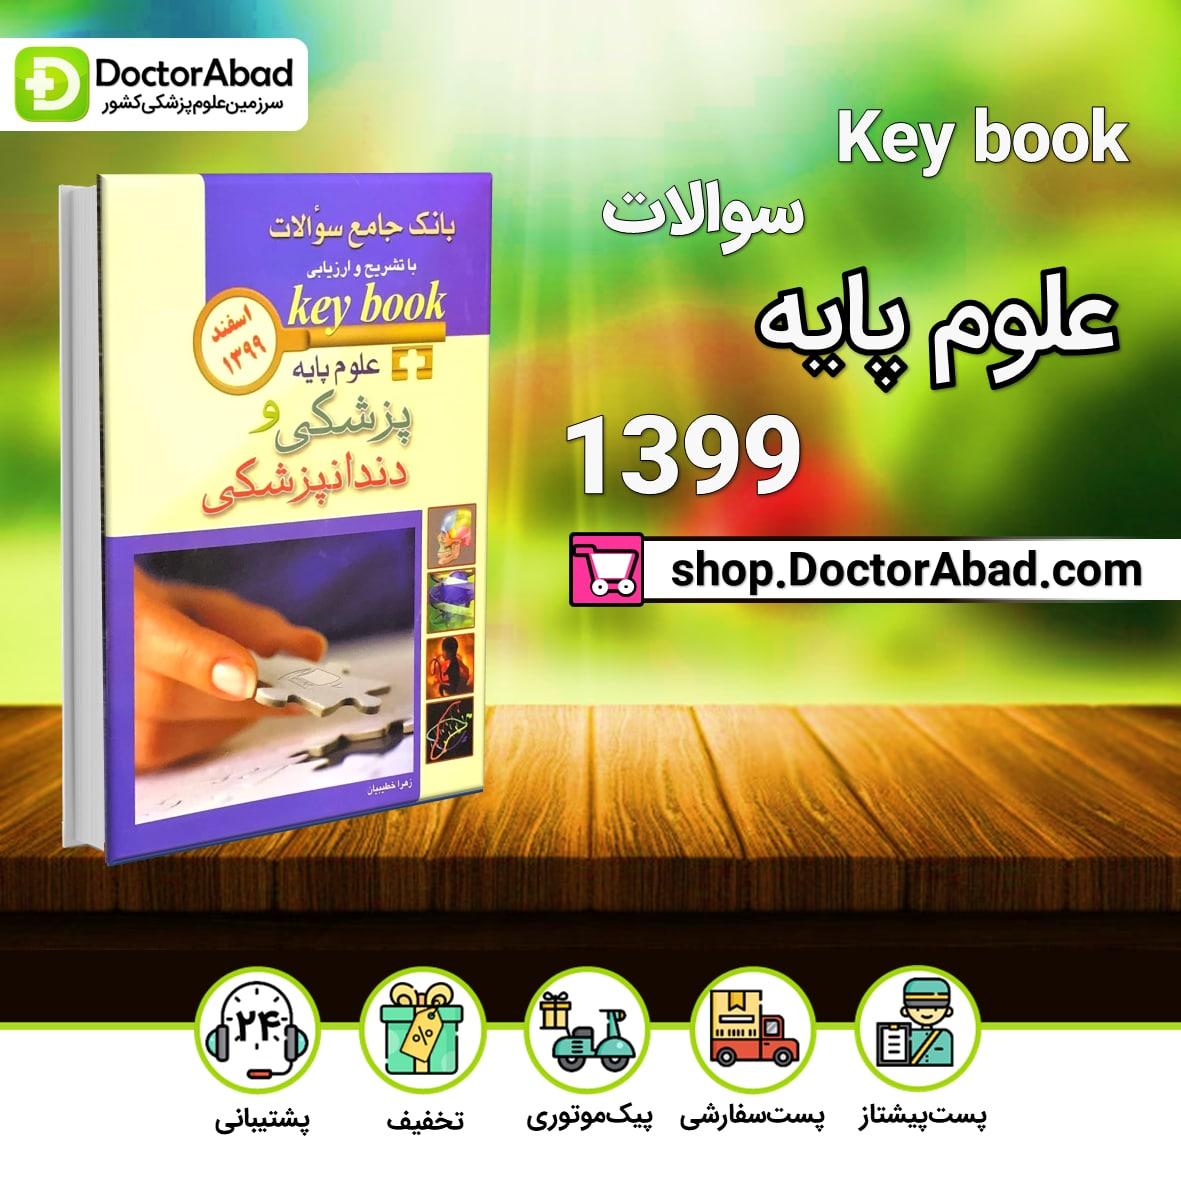 key book بانک جامع سوالات علوم پایه پزشکی و دندانپزشکی اسفند 1399(انتشارات اندیشه رفیع)